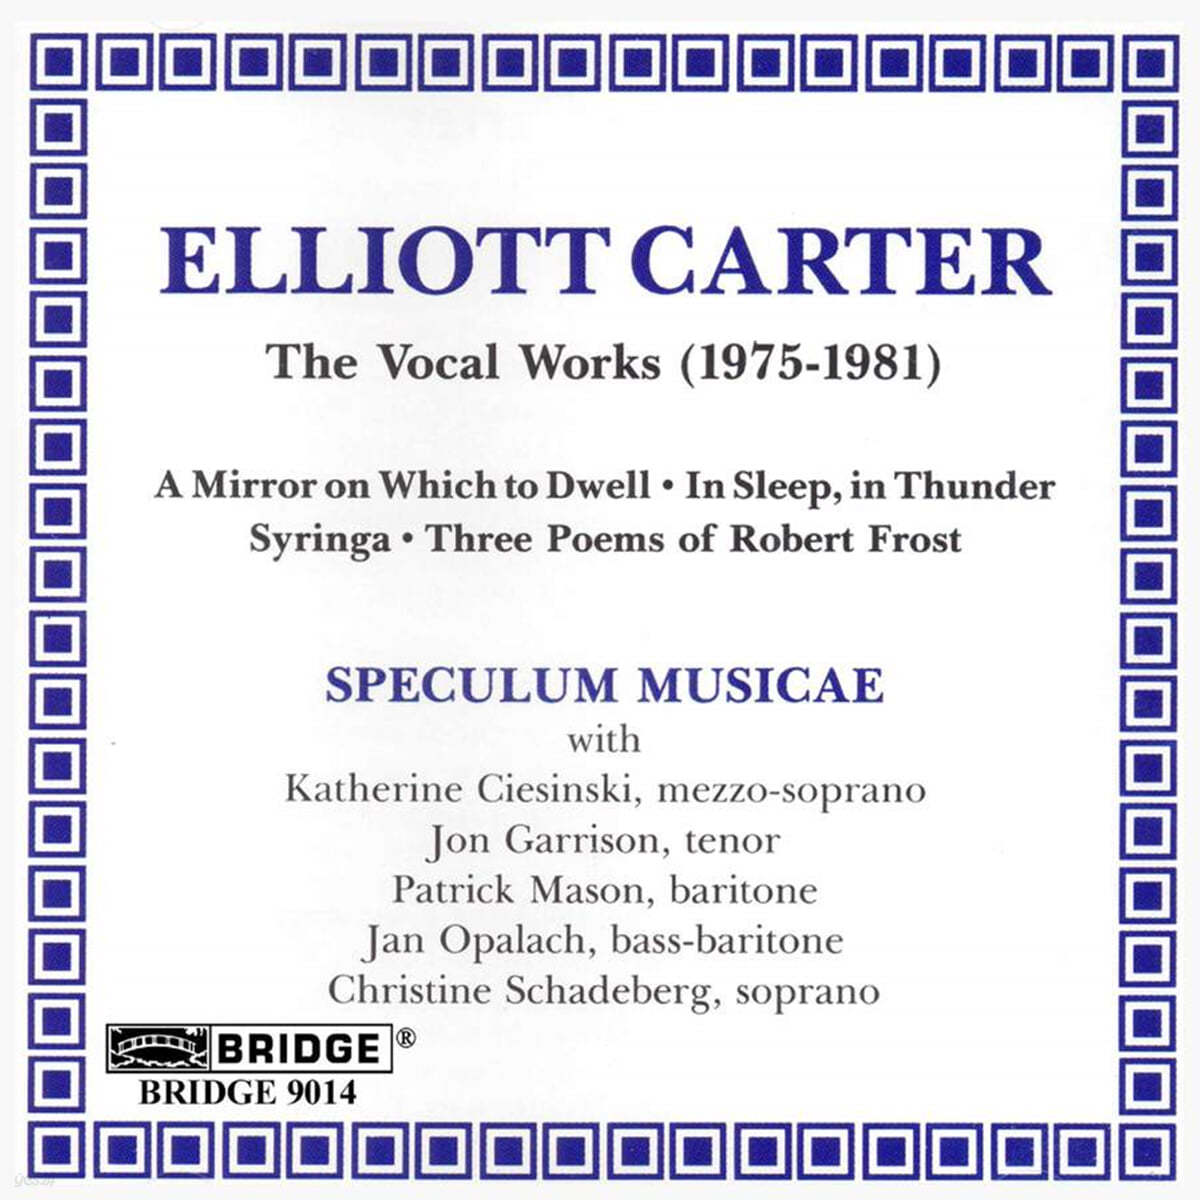 Speculum Musicae 엘리엇 카터의 음악 (Music of Elliott Carter - Vol. 1 : Vocal Works 1975-1981)